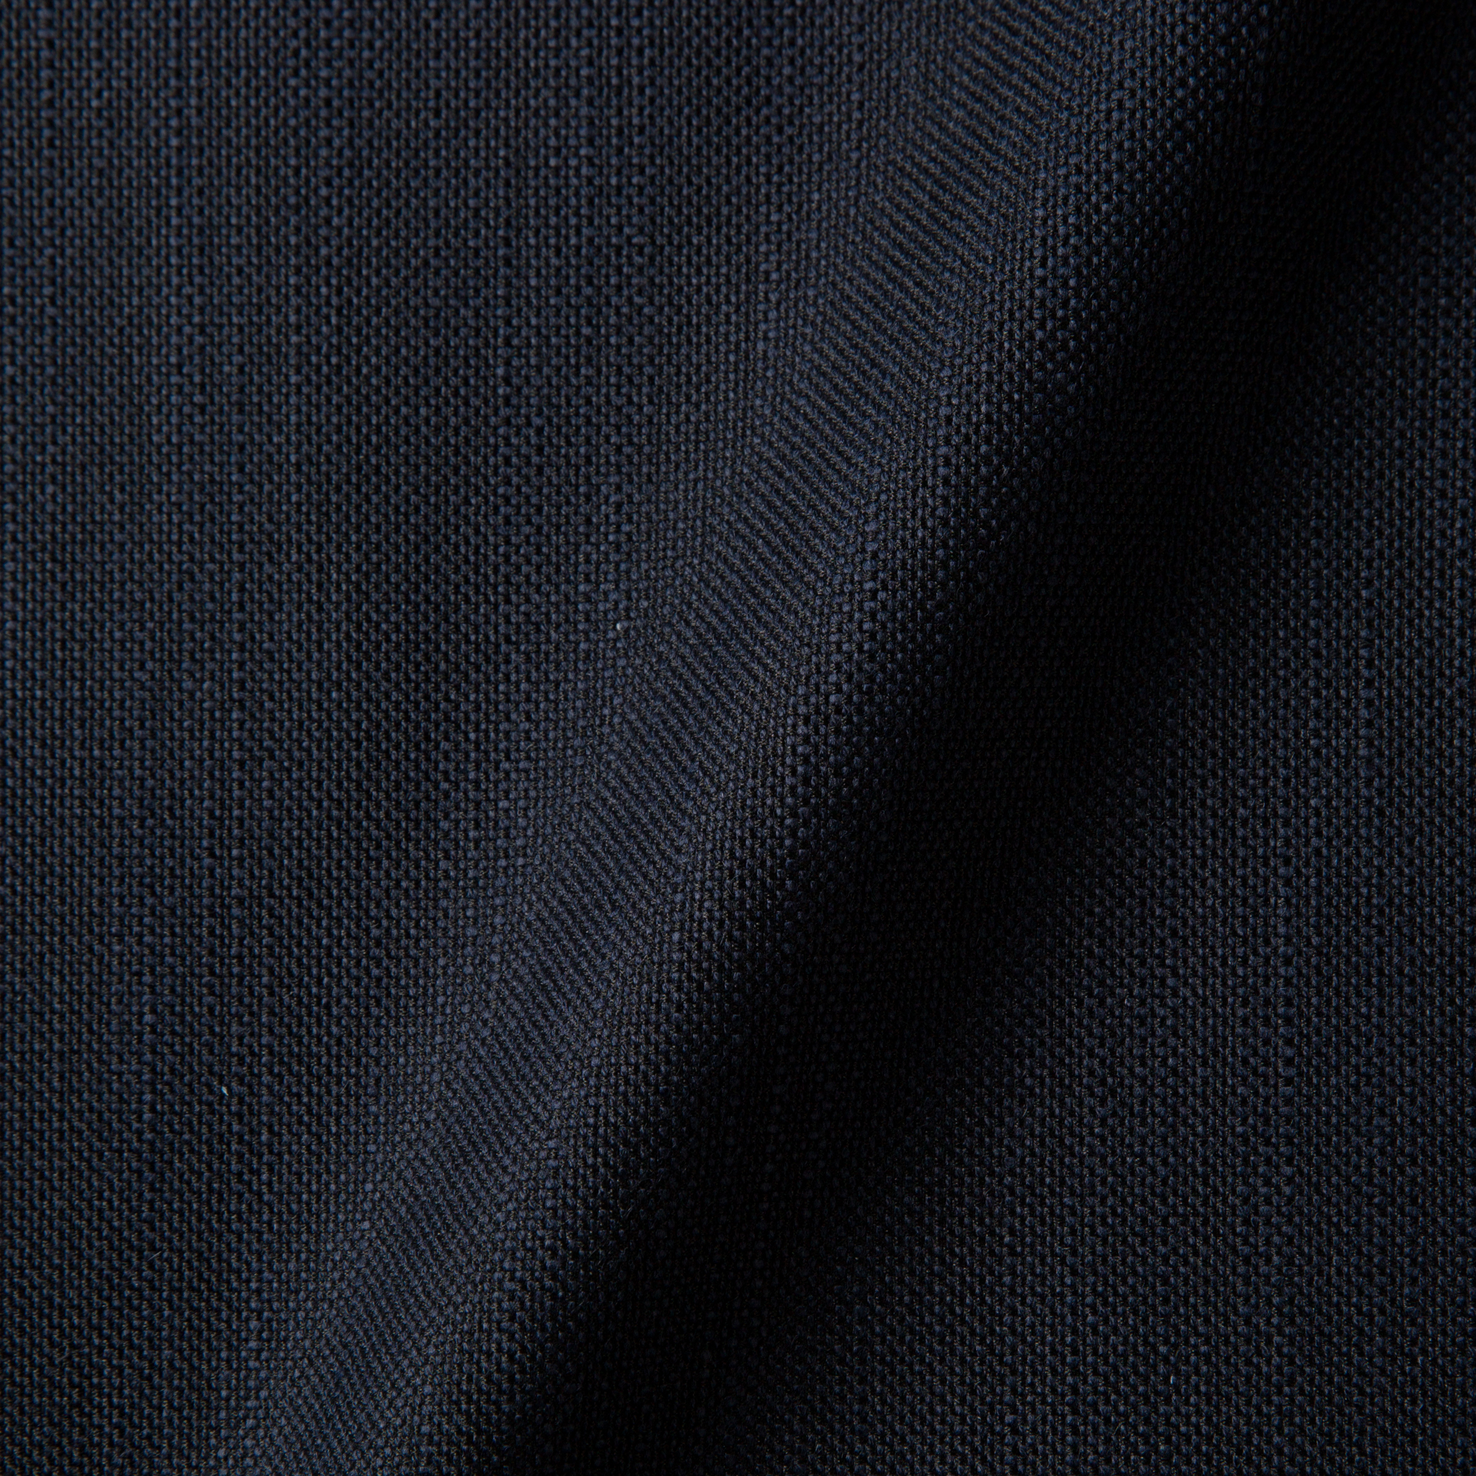 Fabric sample Macchedil Sottile Black Indigo